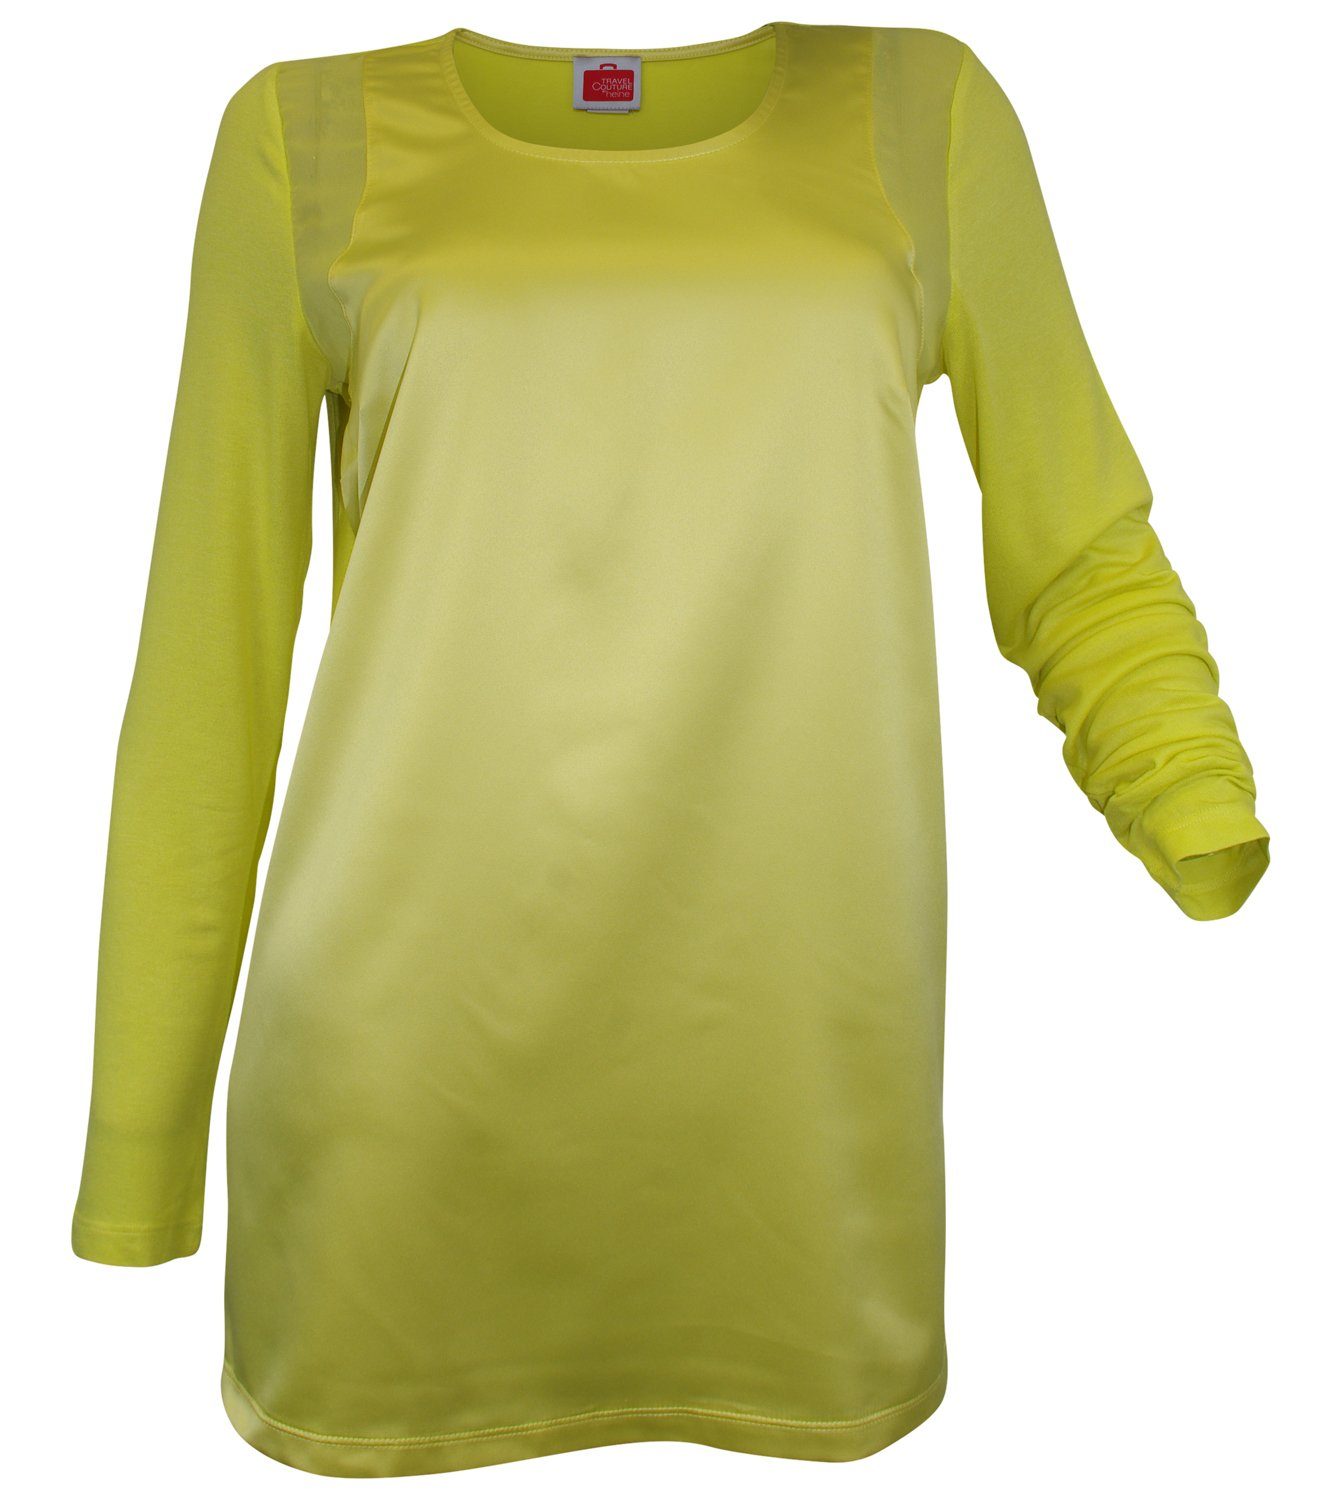 YESET Blusentop langarm Blusenshirt Taillierte Bluse lemon Tunika Shirt 095187